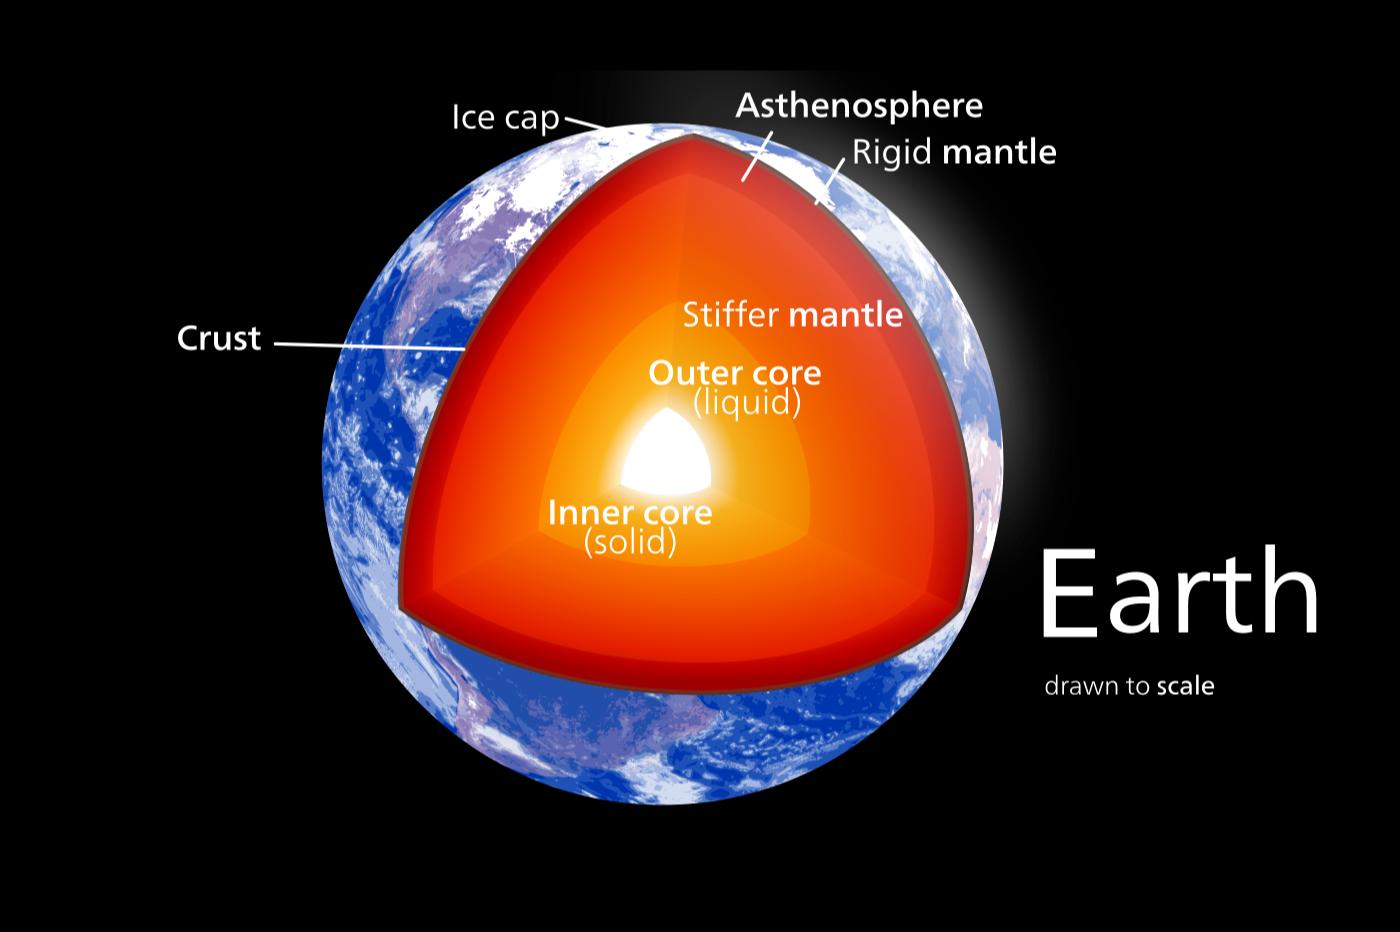 la structure interne de la Terre